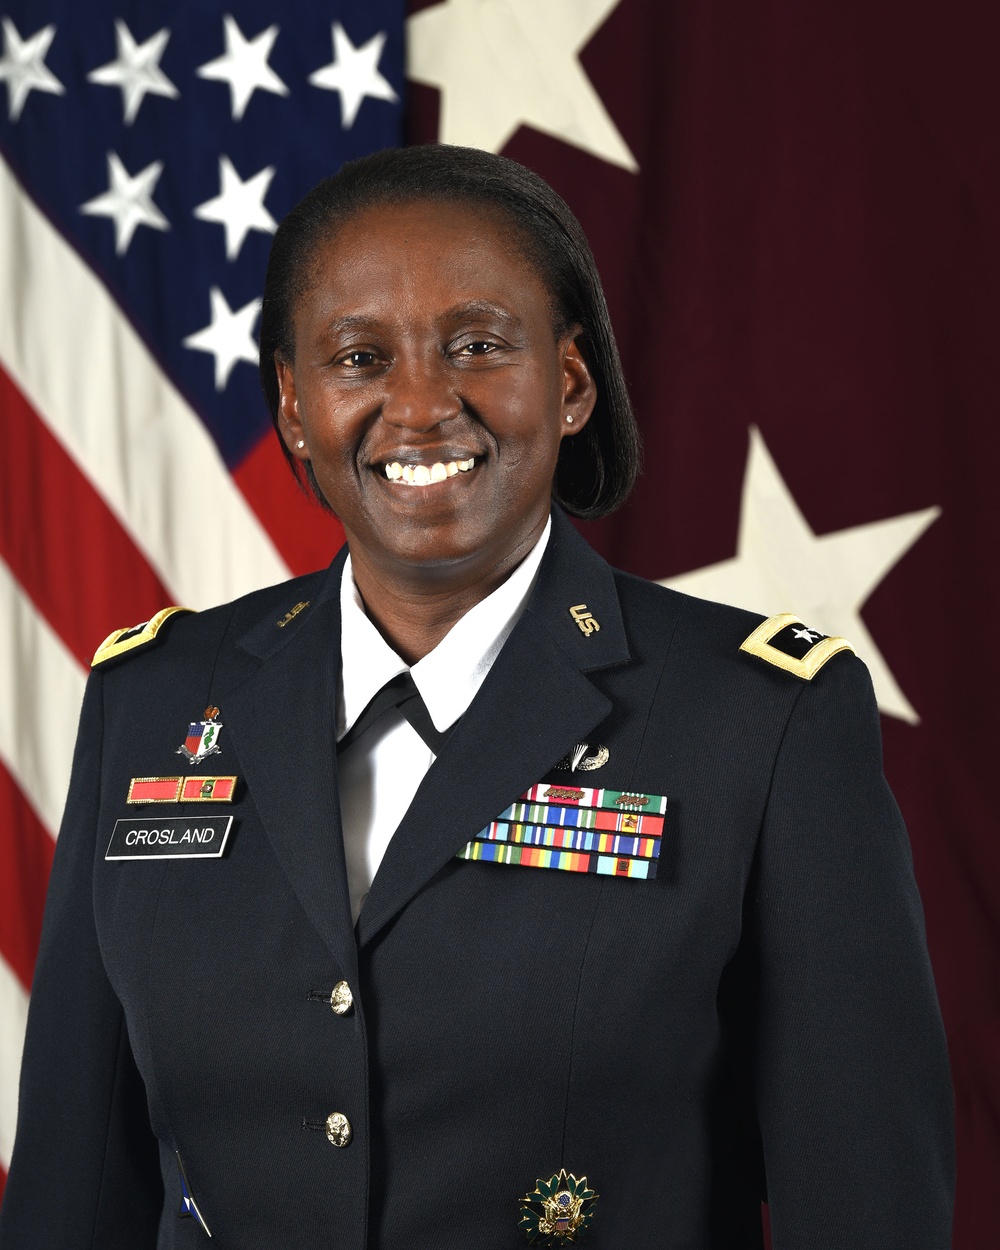 U.S. Army Maj. Gen. Telita Crosland